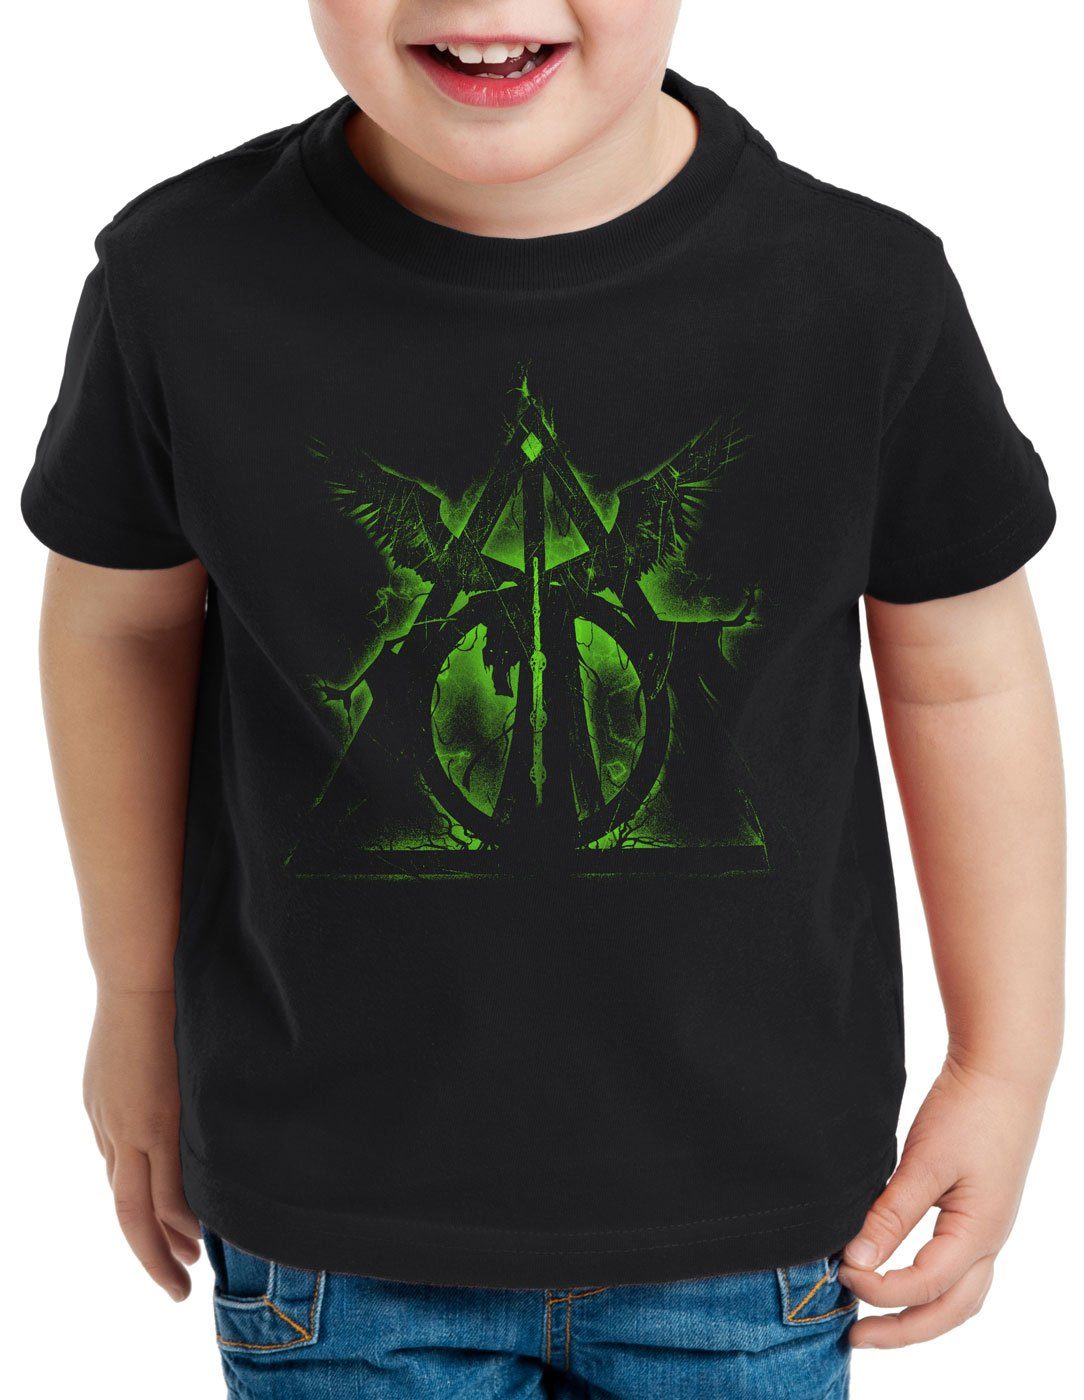 Print-Shirt Magie Besen Deathly T-Shirt Kinder Hollows style3